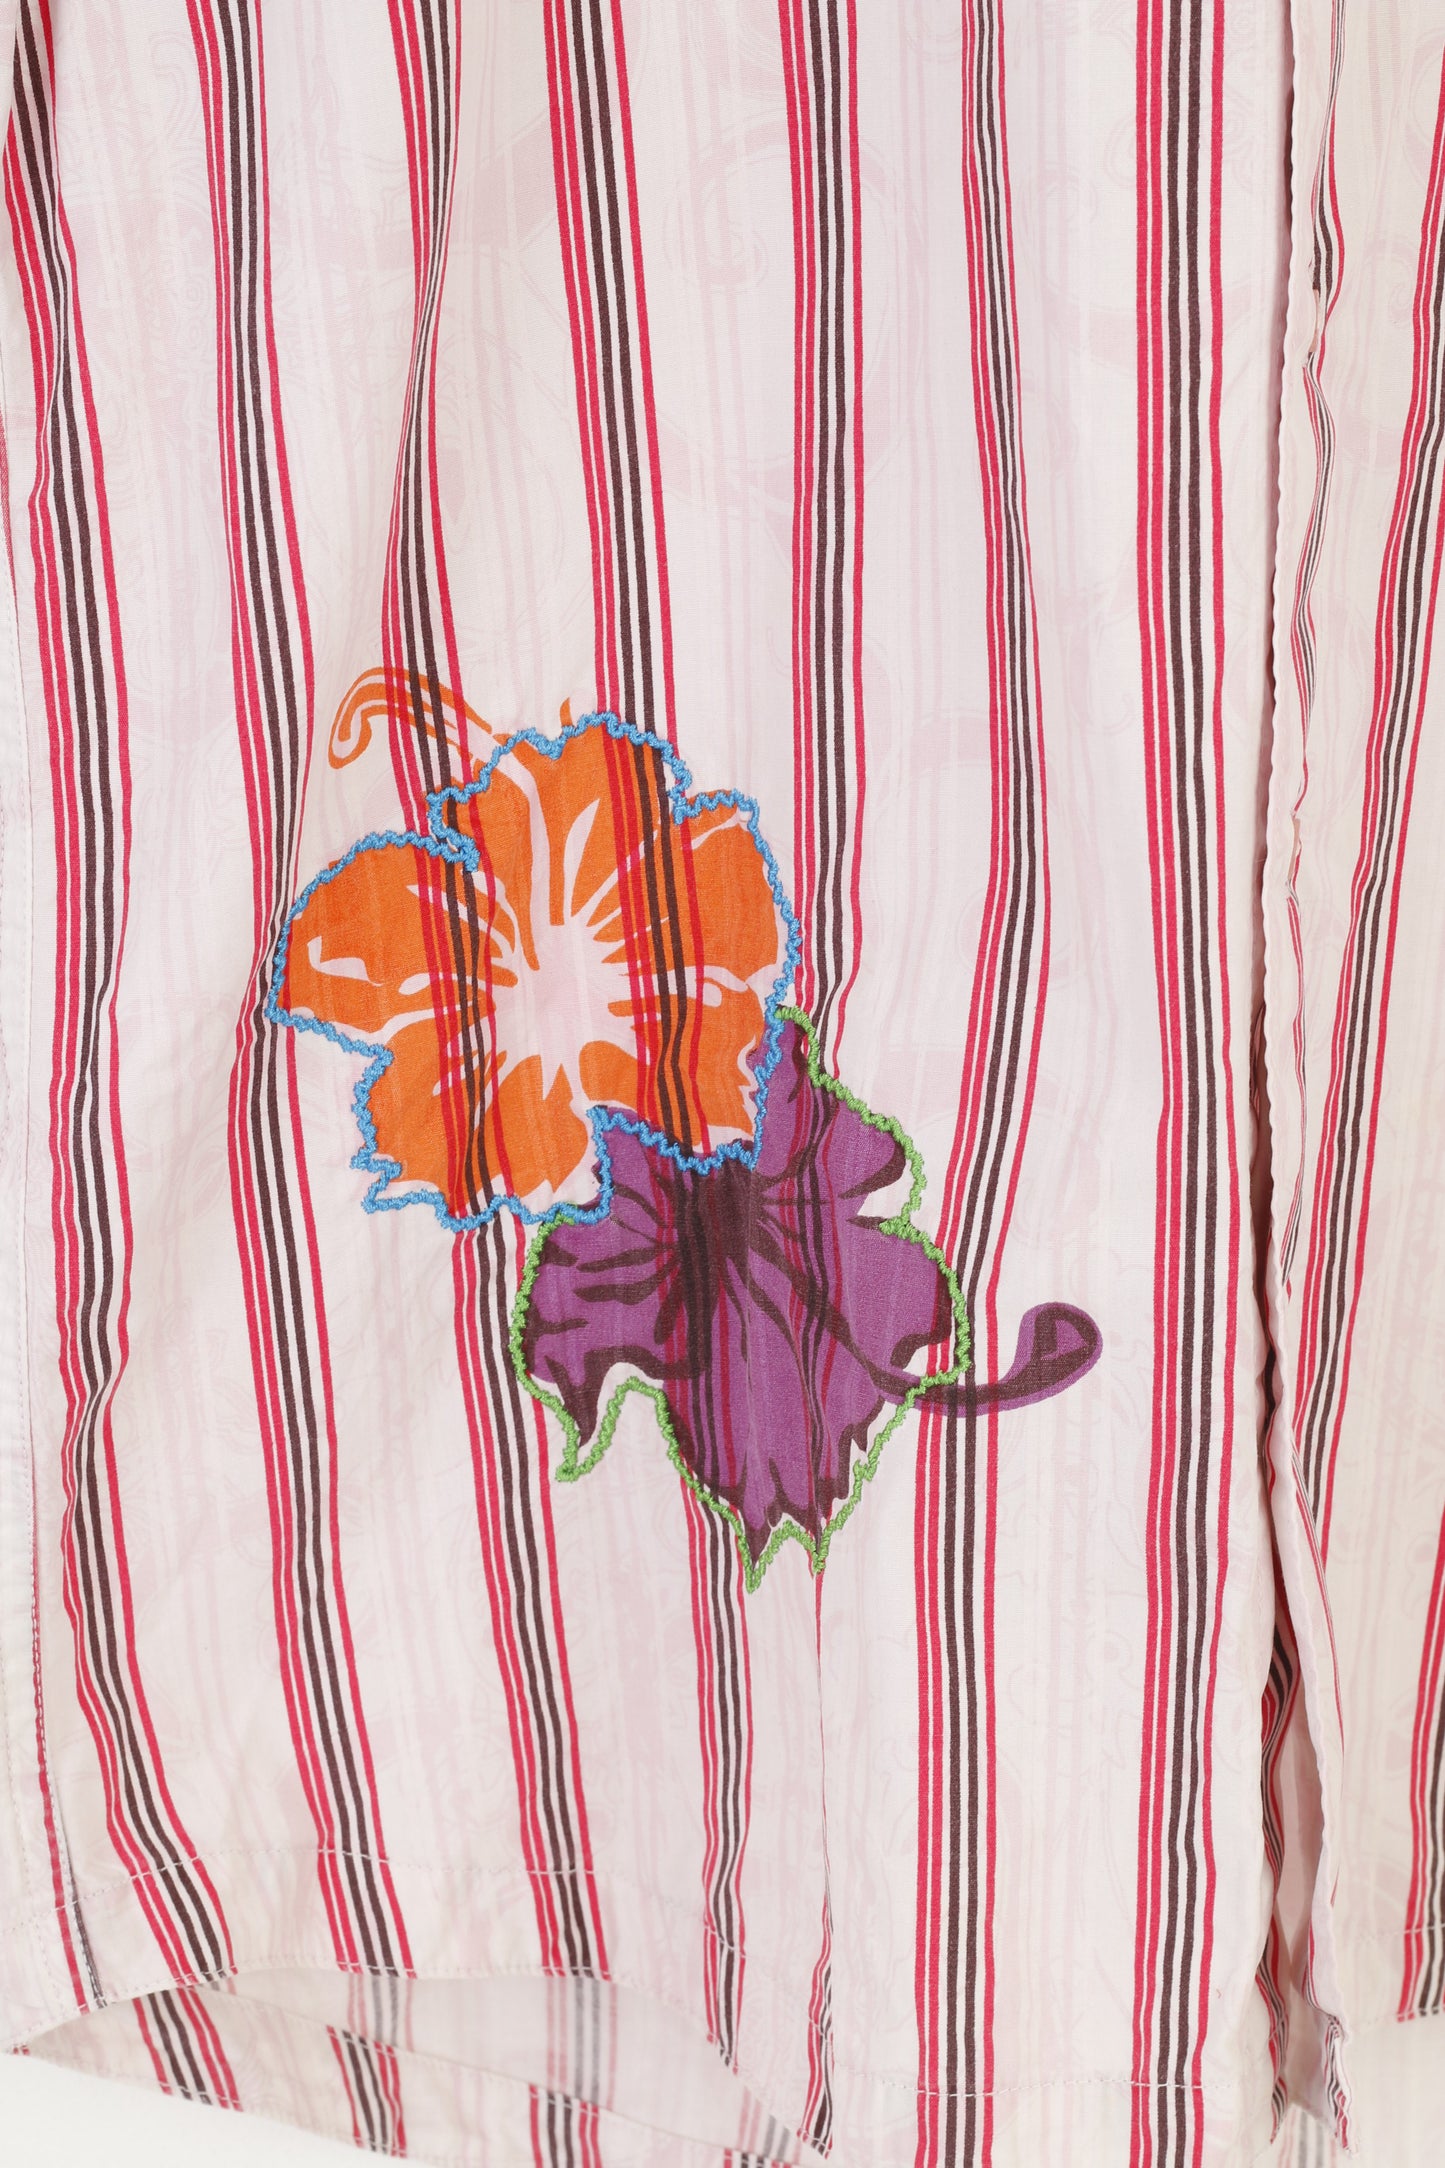 Tom Tailor Men M Casual Shirt Pink Striped Vintage Short Sleeve Floral Print Cotton Top